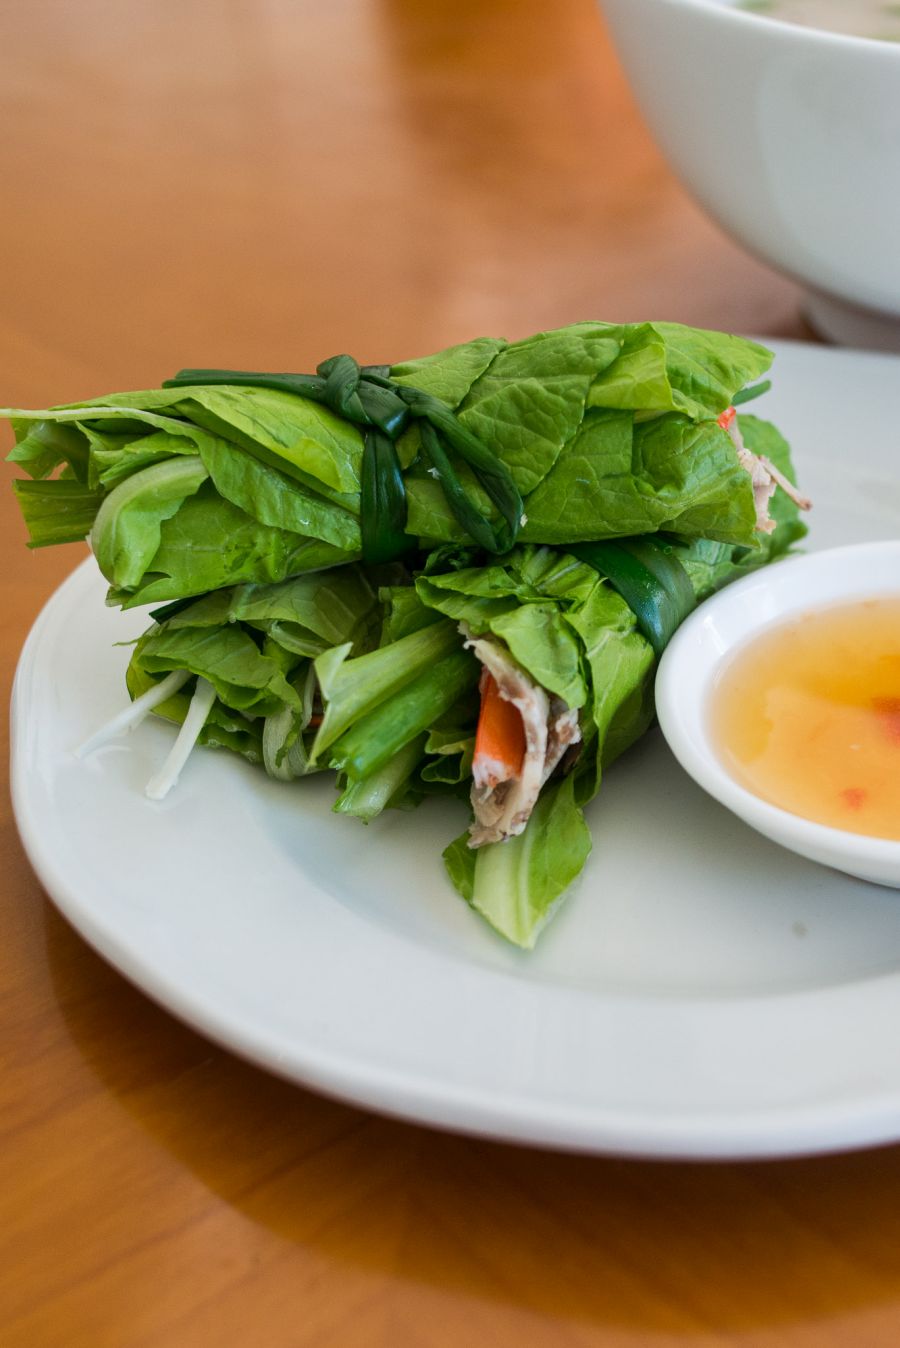 Goi Cuon U&I - prawn and pork with salad wrapped in green leaves (AU$6.50)